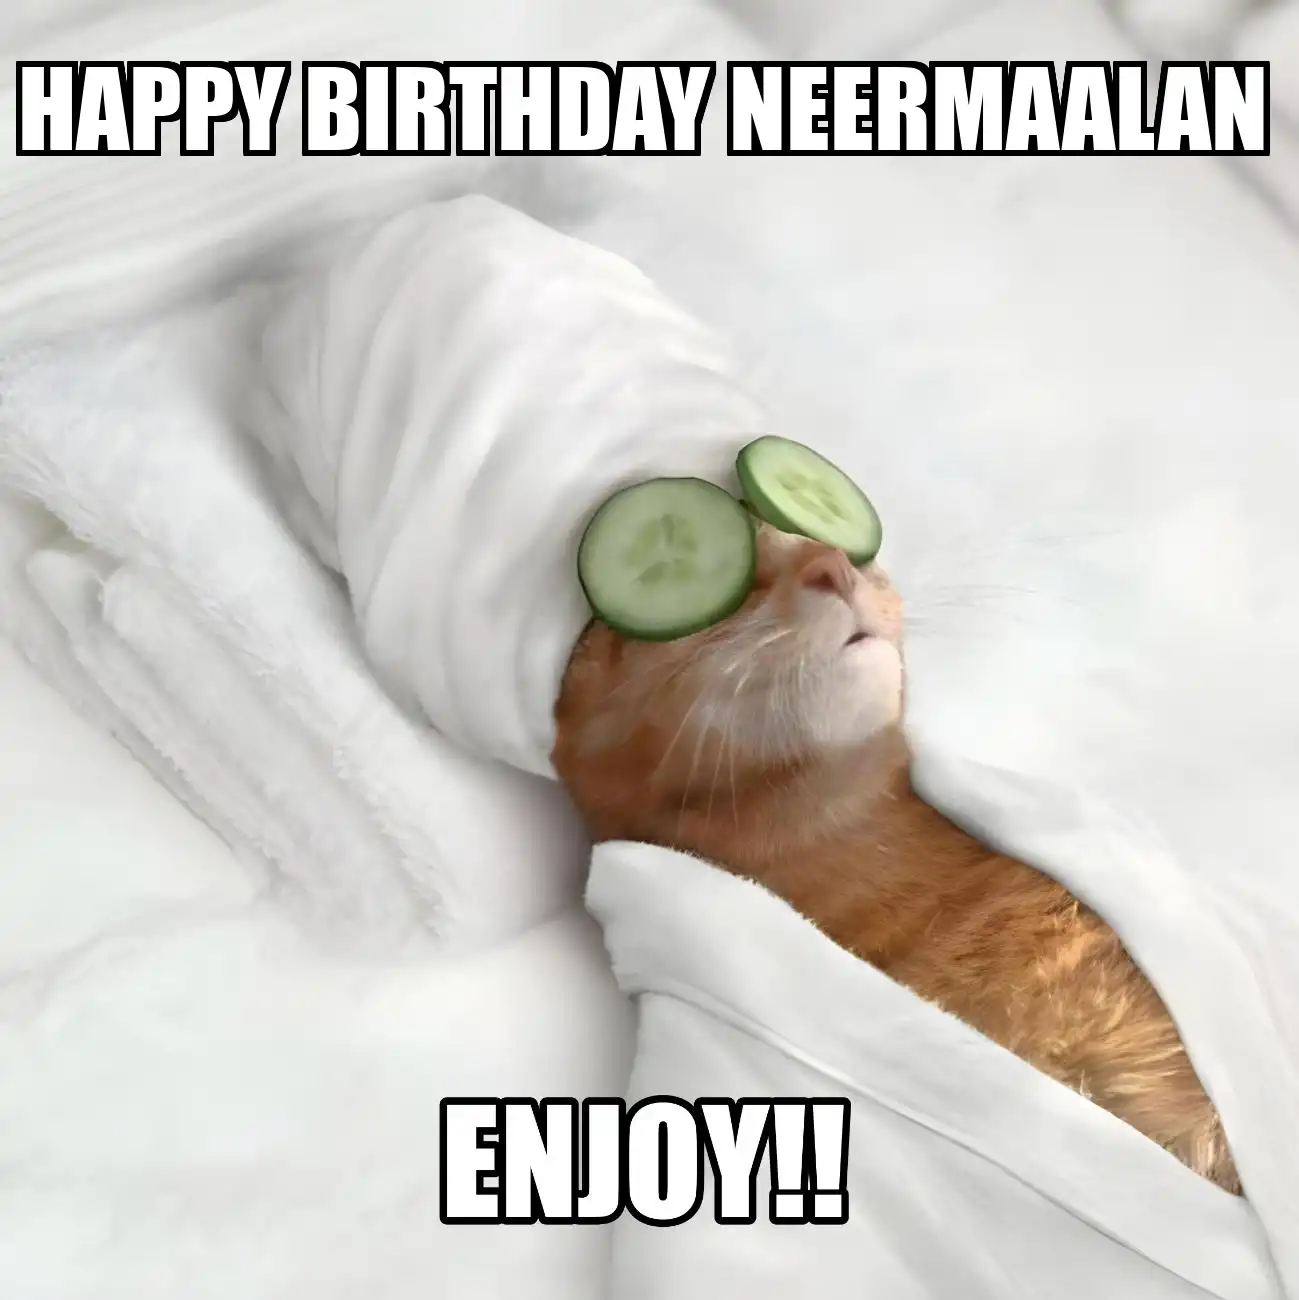 Happy Birthday Neermaalan Enjoy Cat Meme